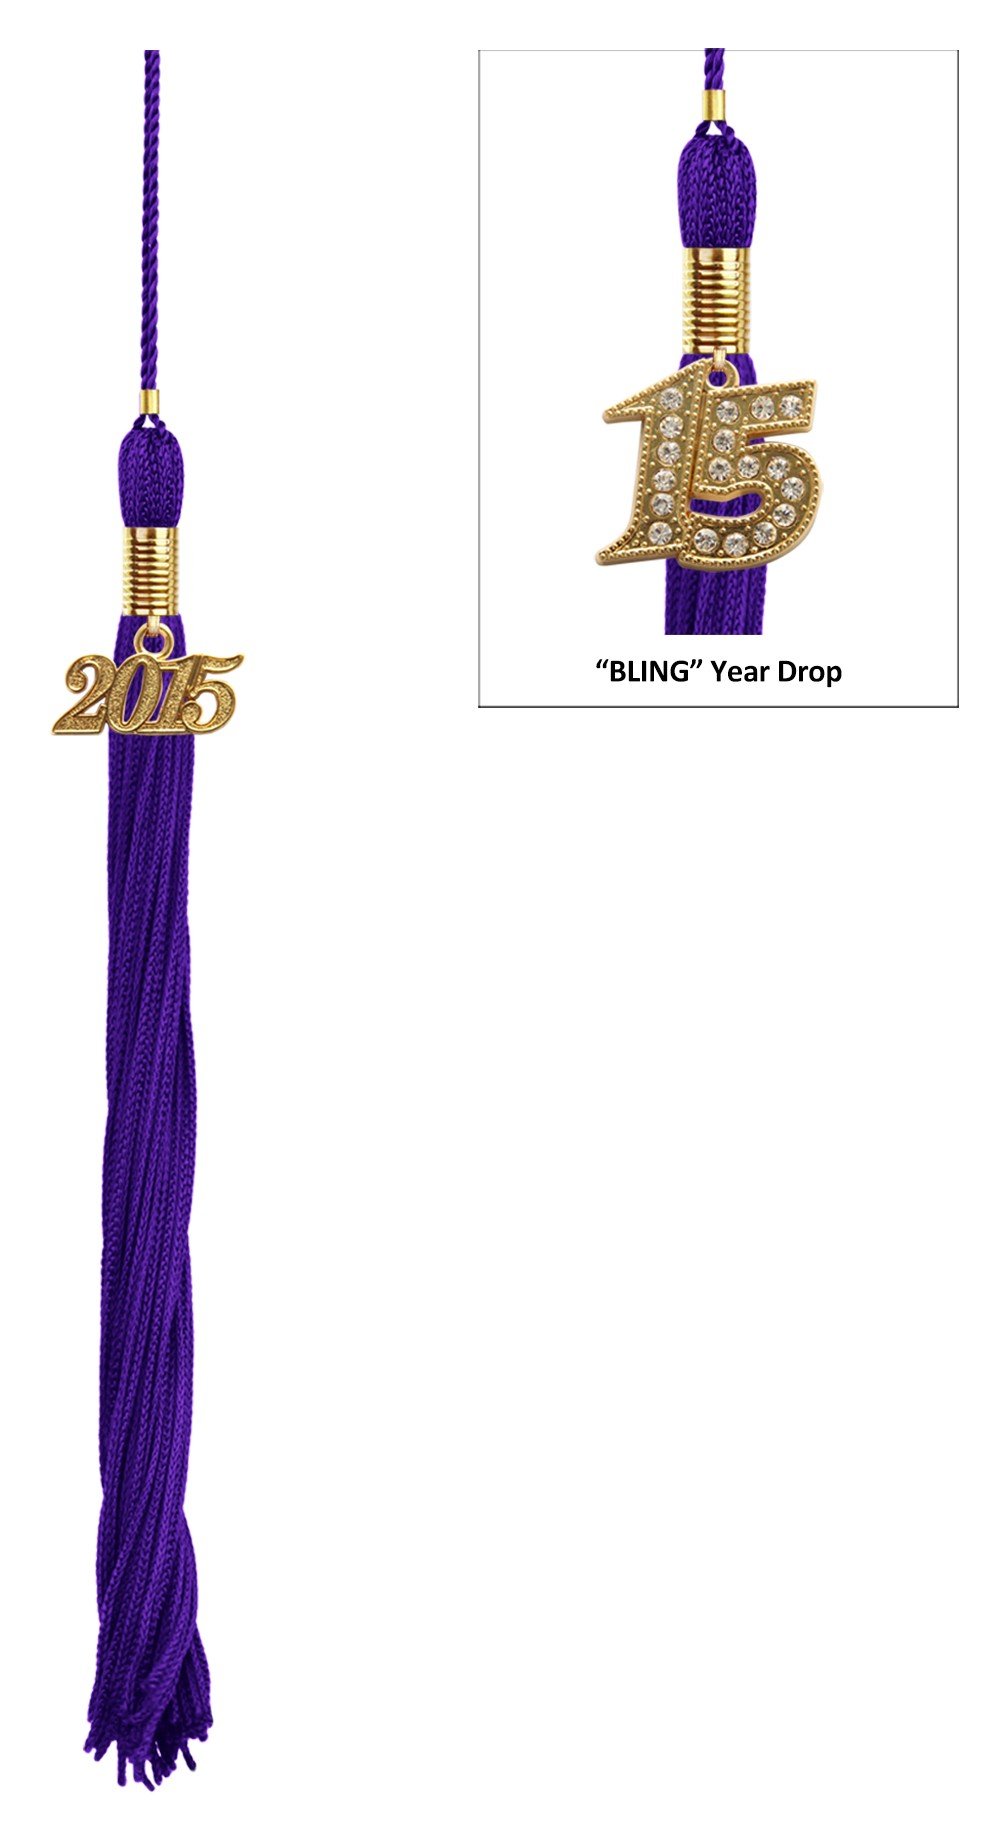 Shiny Purple High School Graduation Cap and Gown - Graduation Cap and Gown